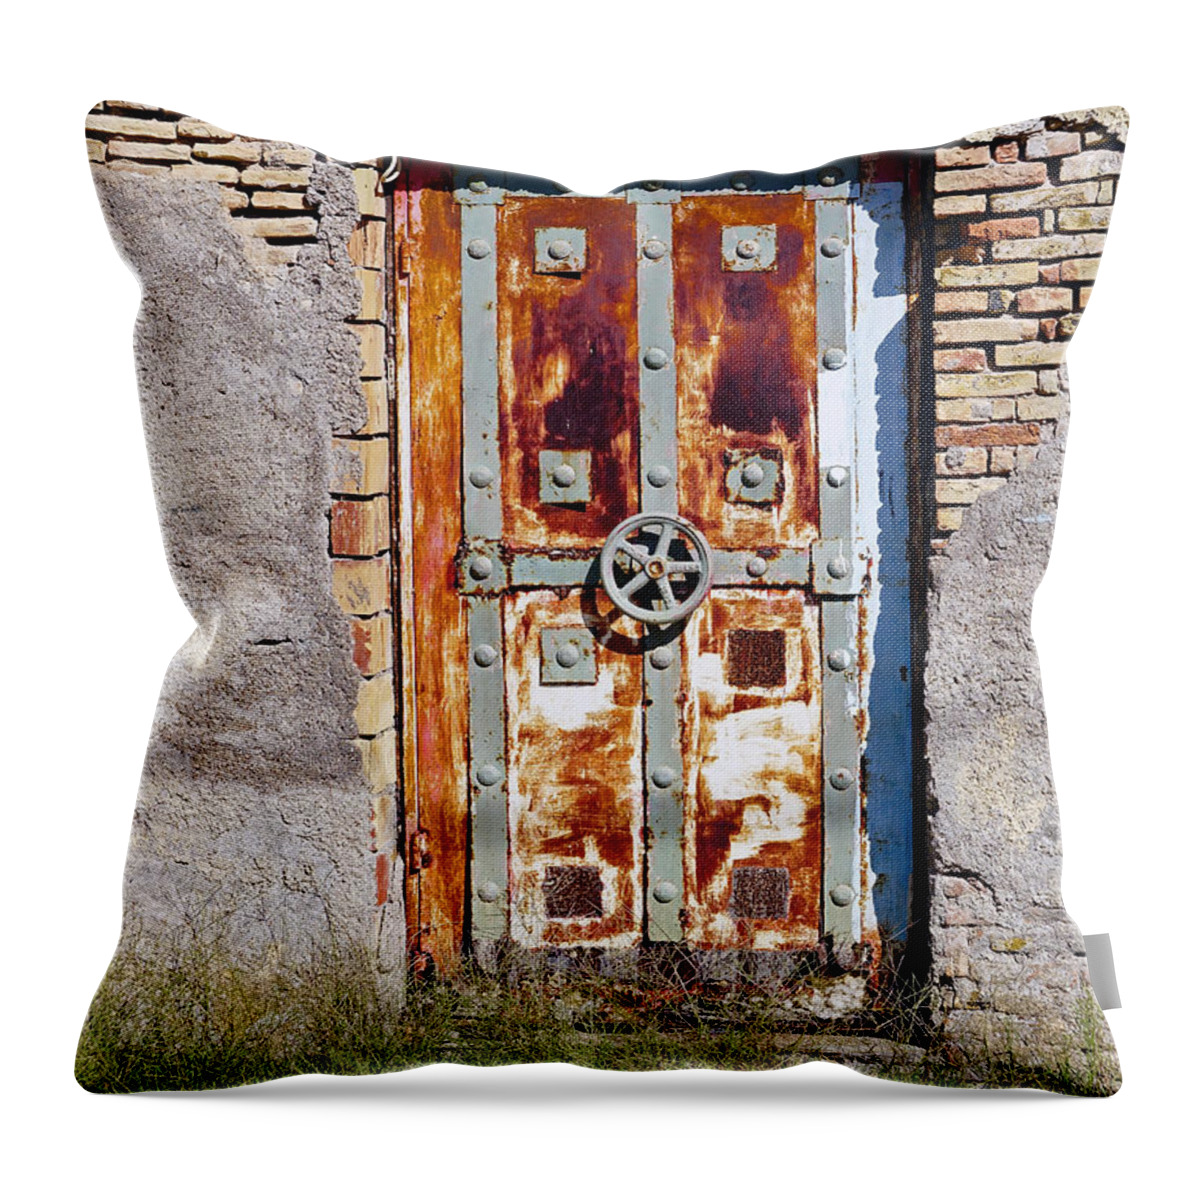 Old Rusty Door Throw Pillow featuring the photograph An Old Rusty Door In Katakolon Greece by Rick Rosenshein